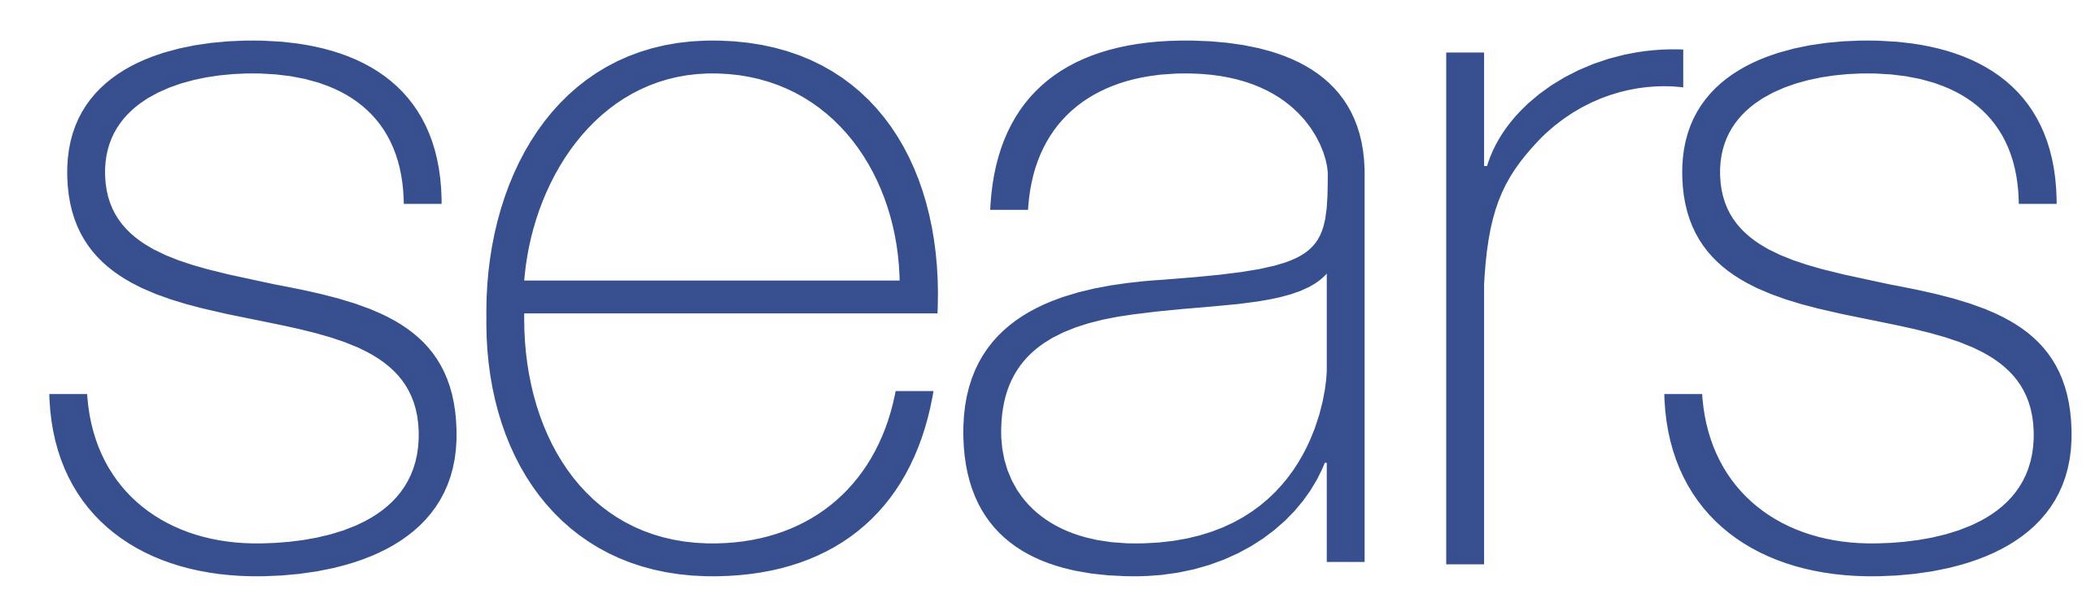 Sears logo clipart.